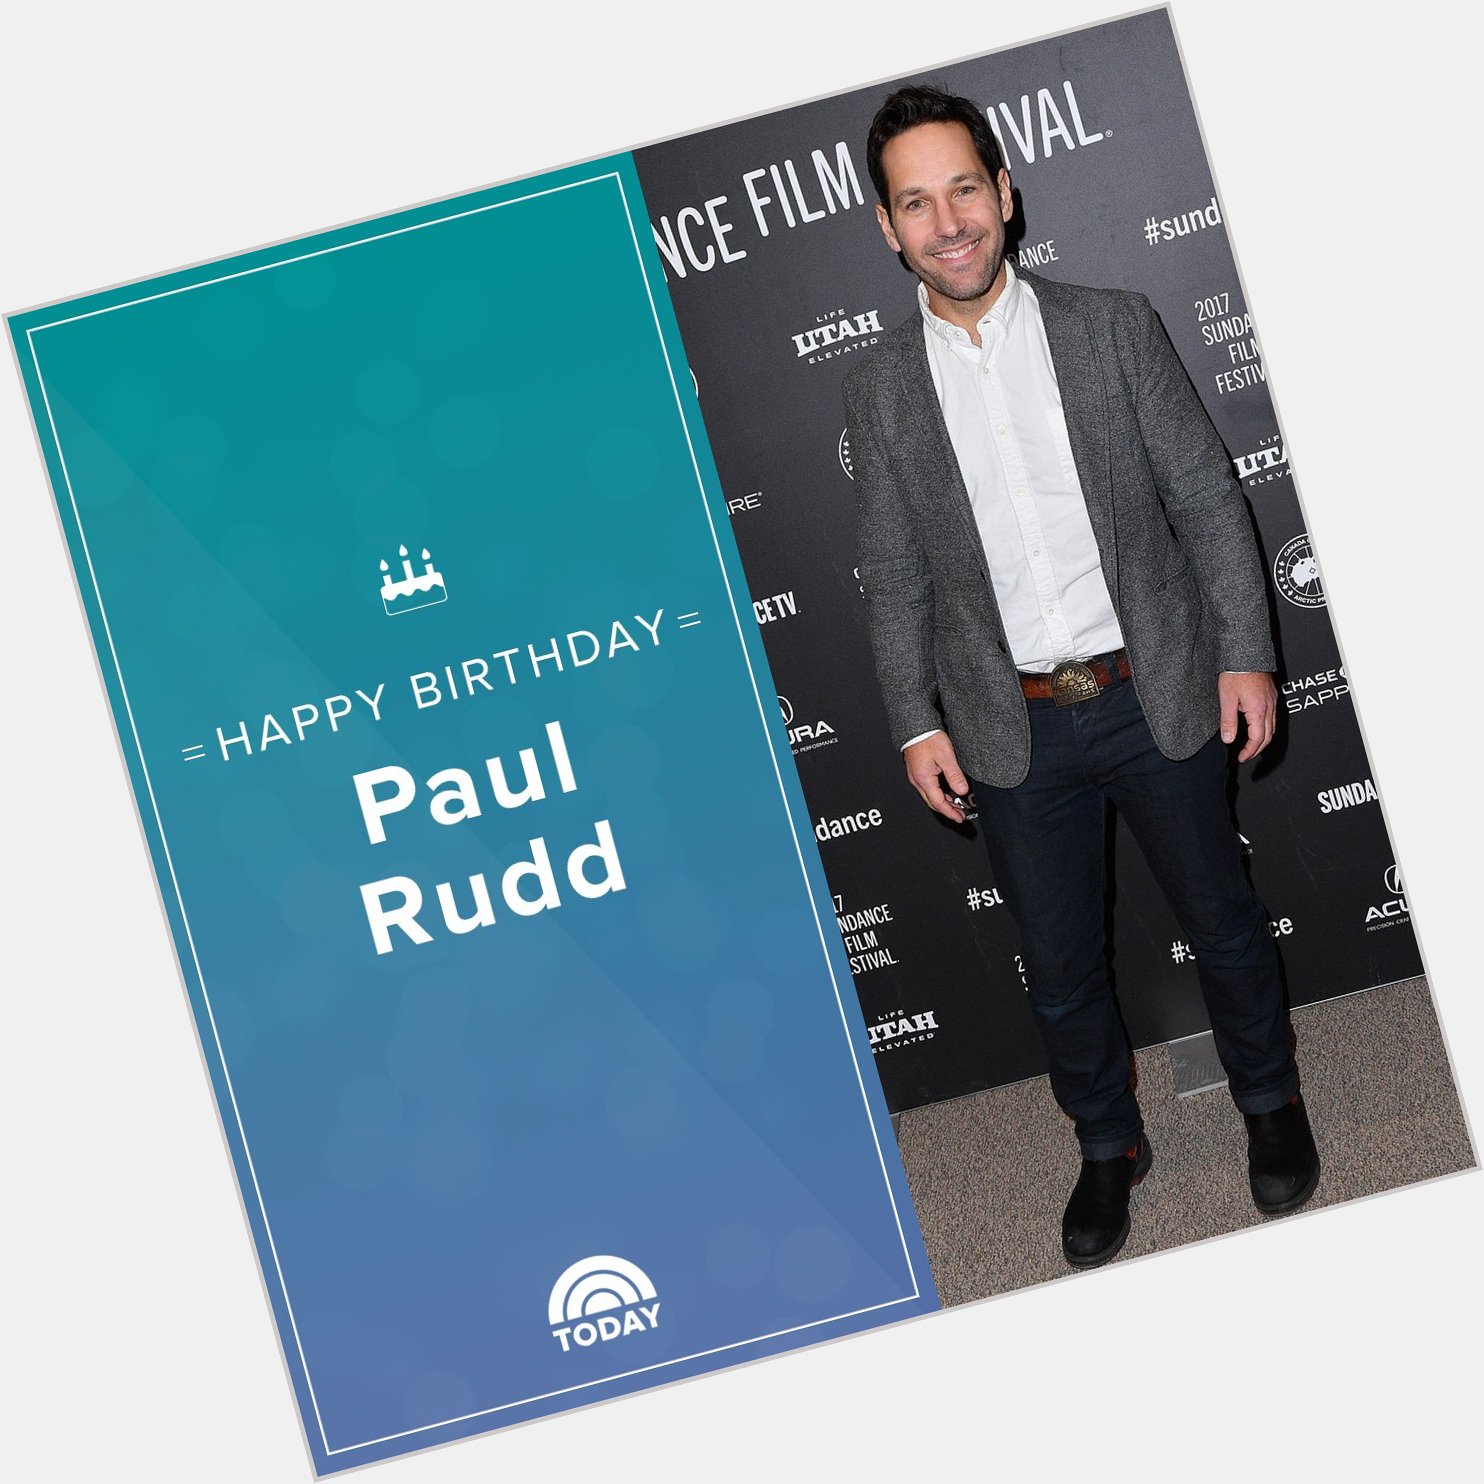 Happy birthday, Paul Rudd! 